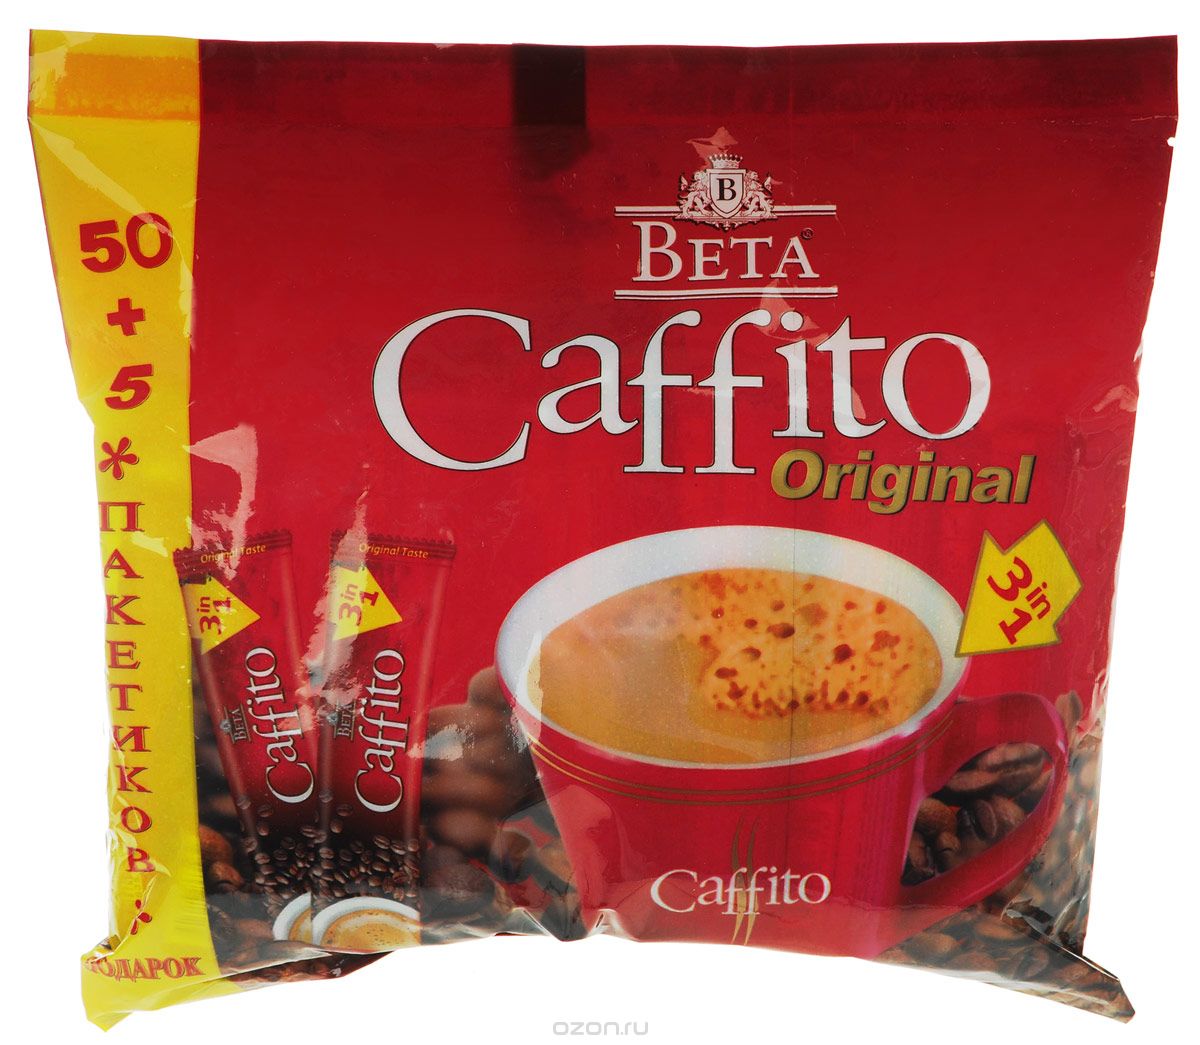 Beta Caffito   3  1, 50  + 5 